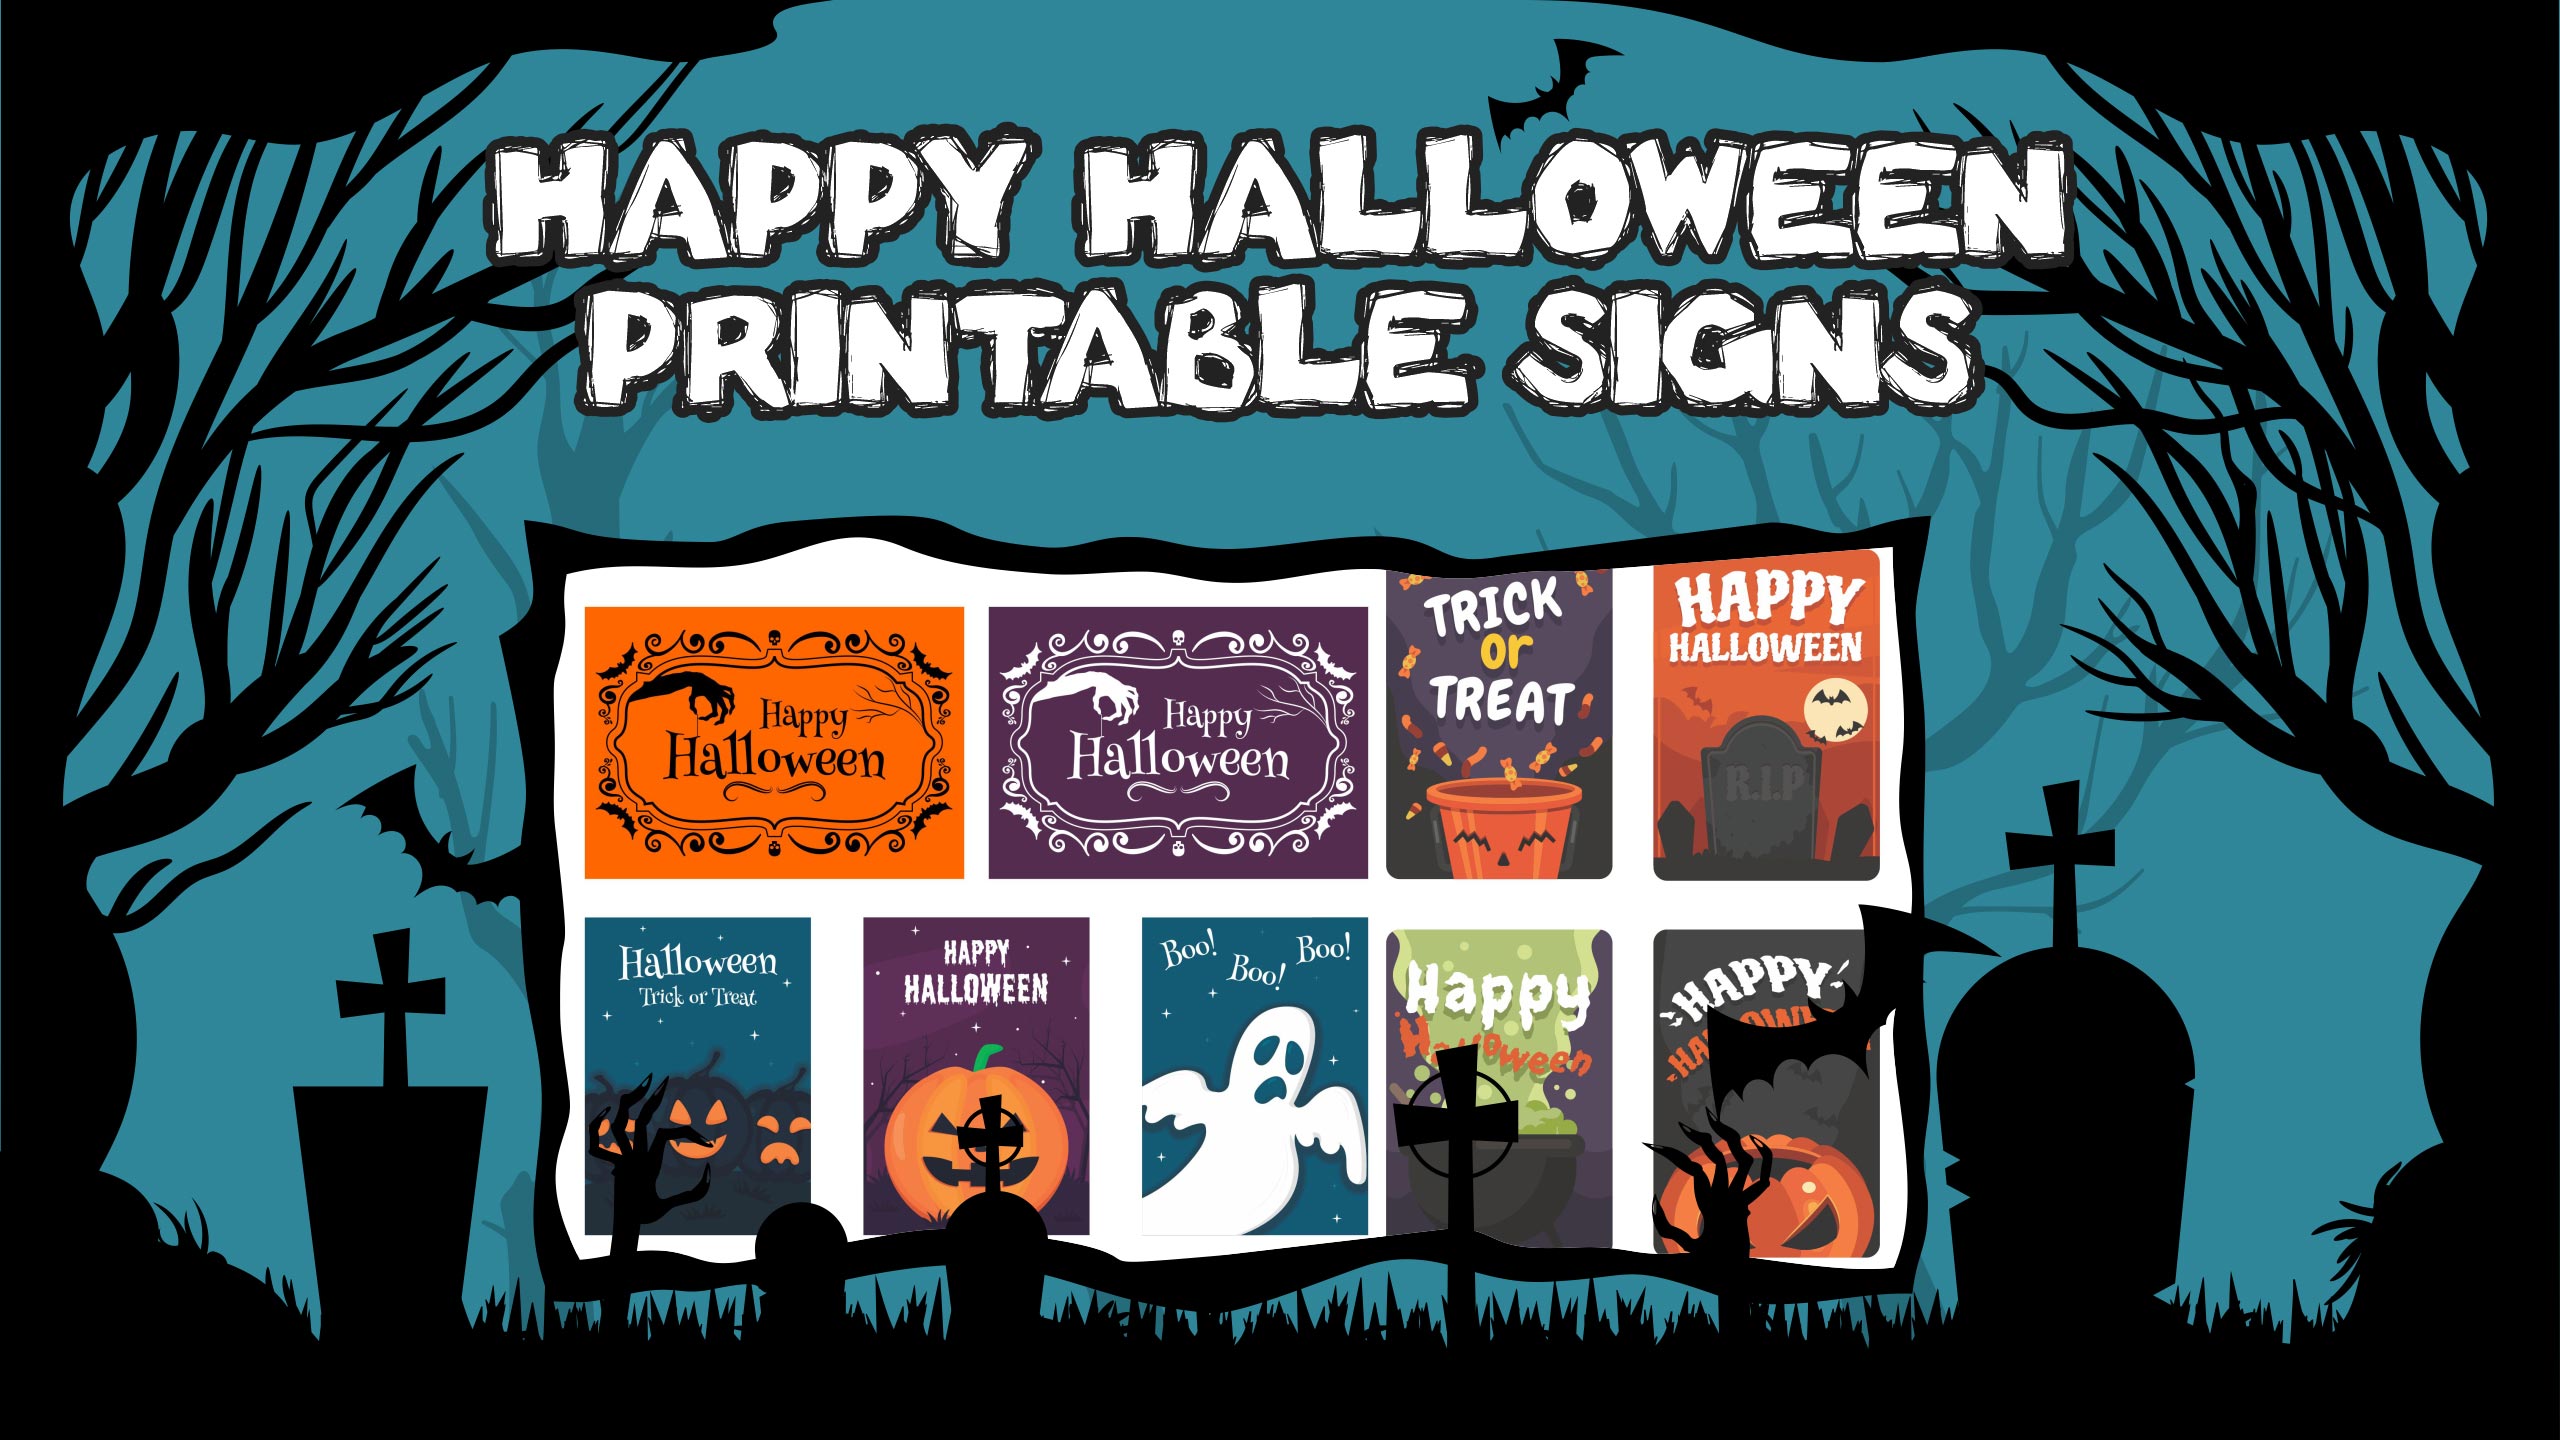 Happy Halloween Printable Signs